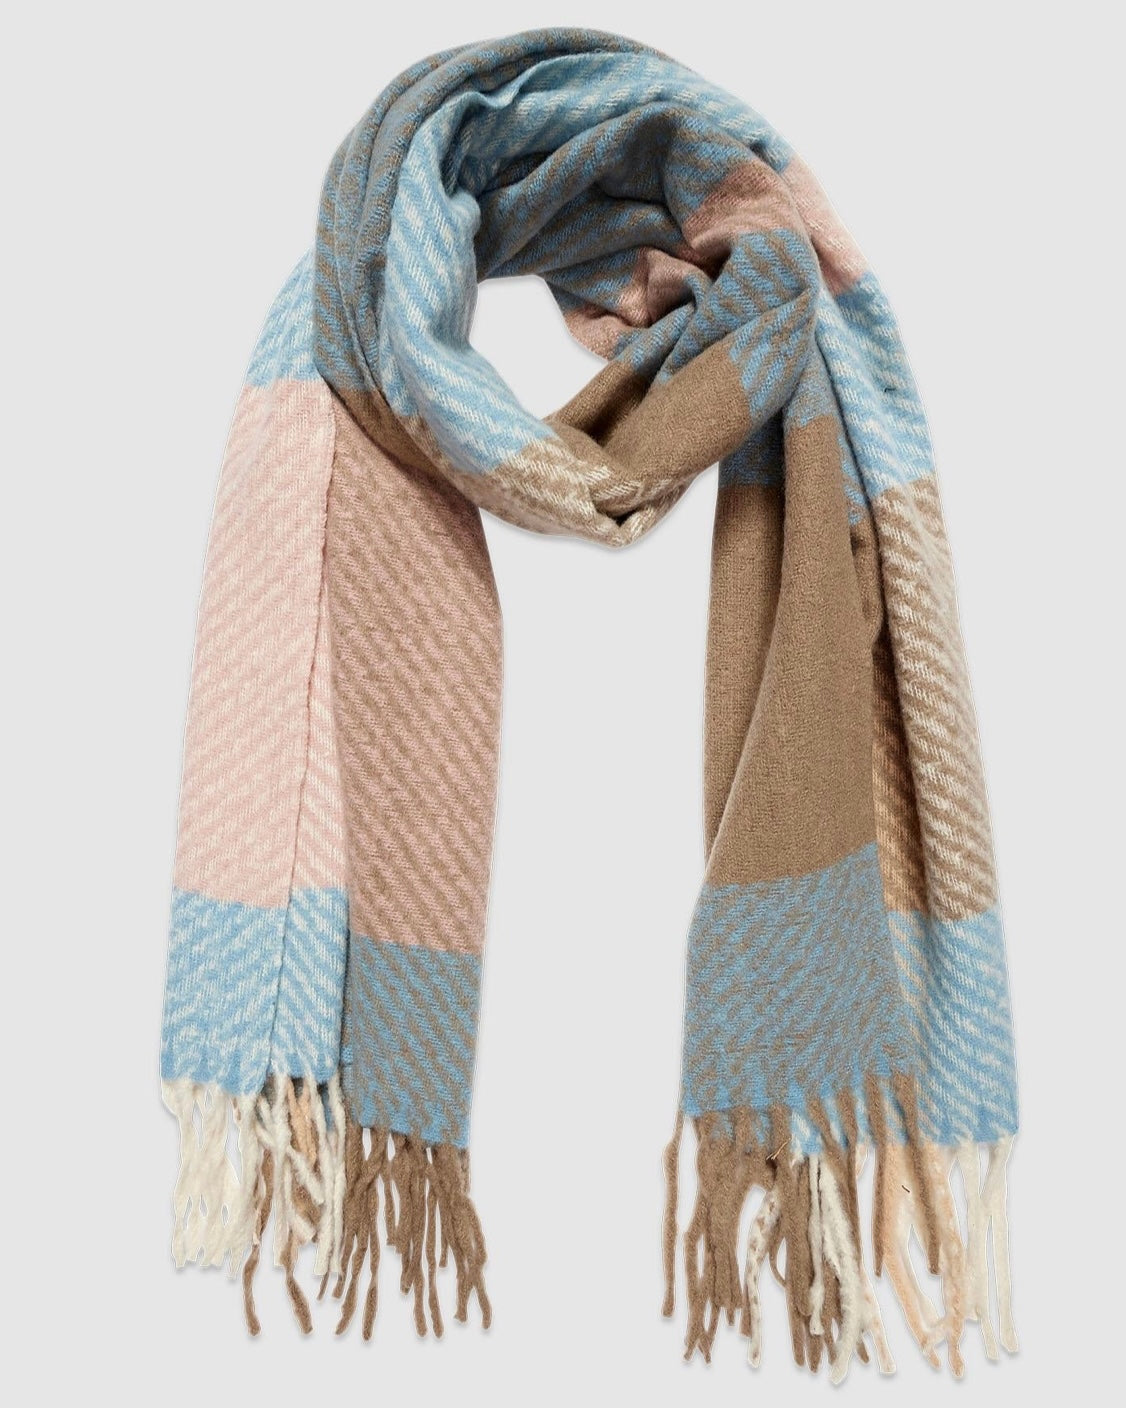 Cambridge Scarf (Chambray), louenhide, winter scarf